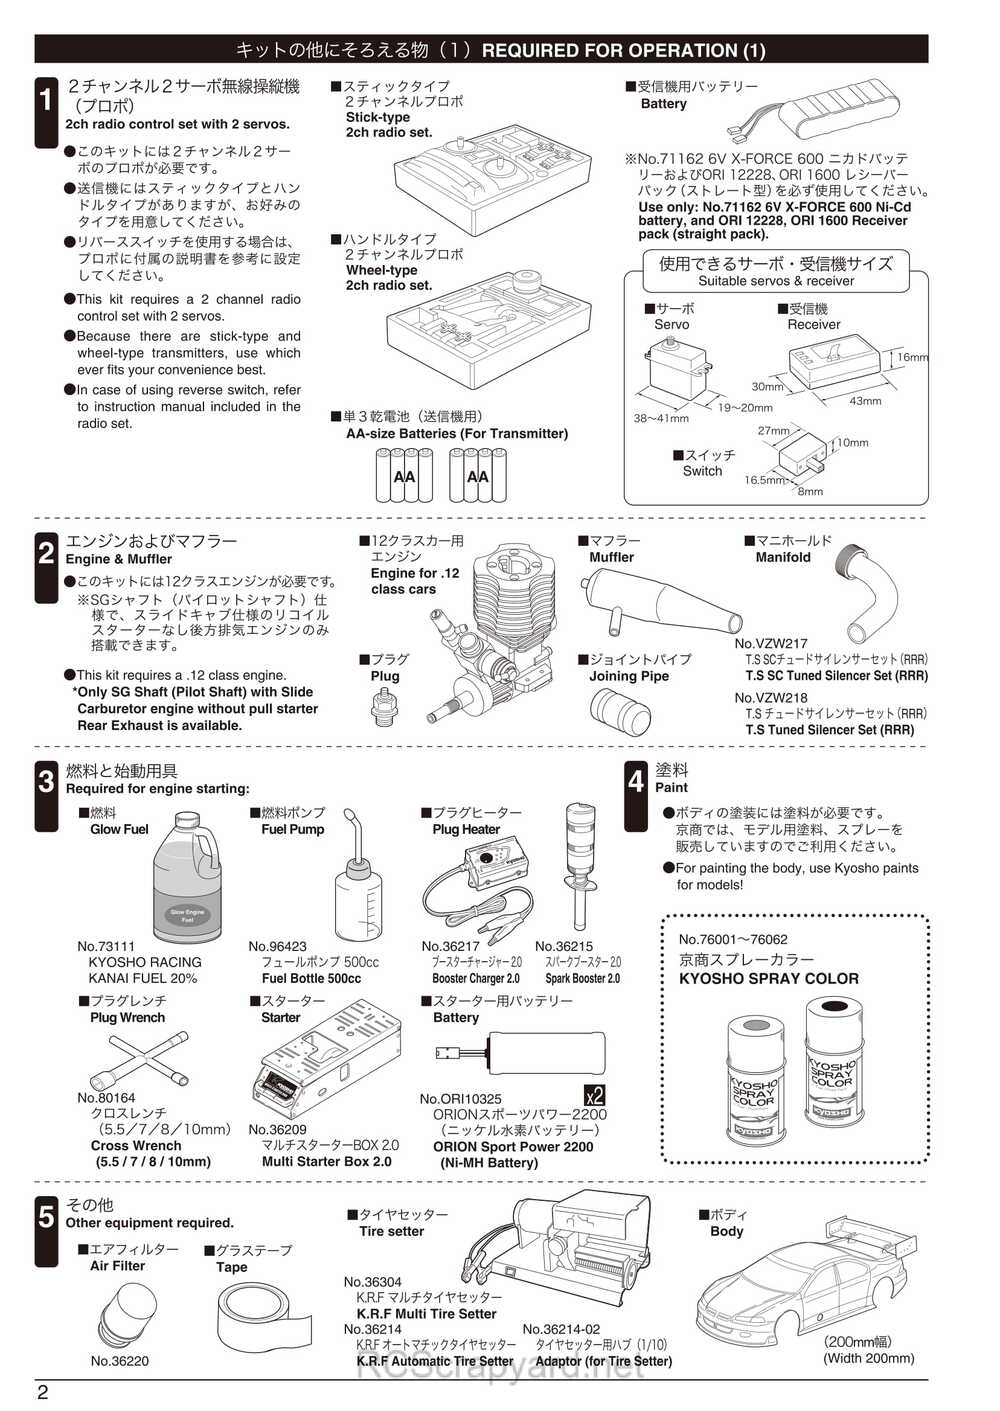 Kyosho - 31263 - V-One RRR Evo2 WC - Manual - Page 02